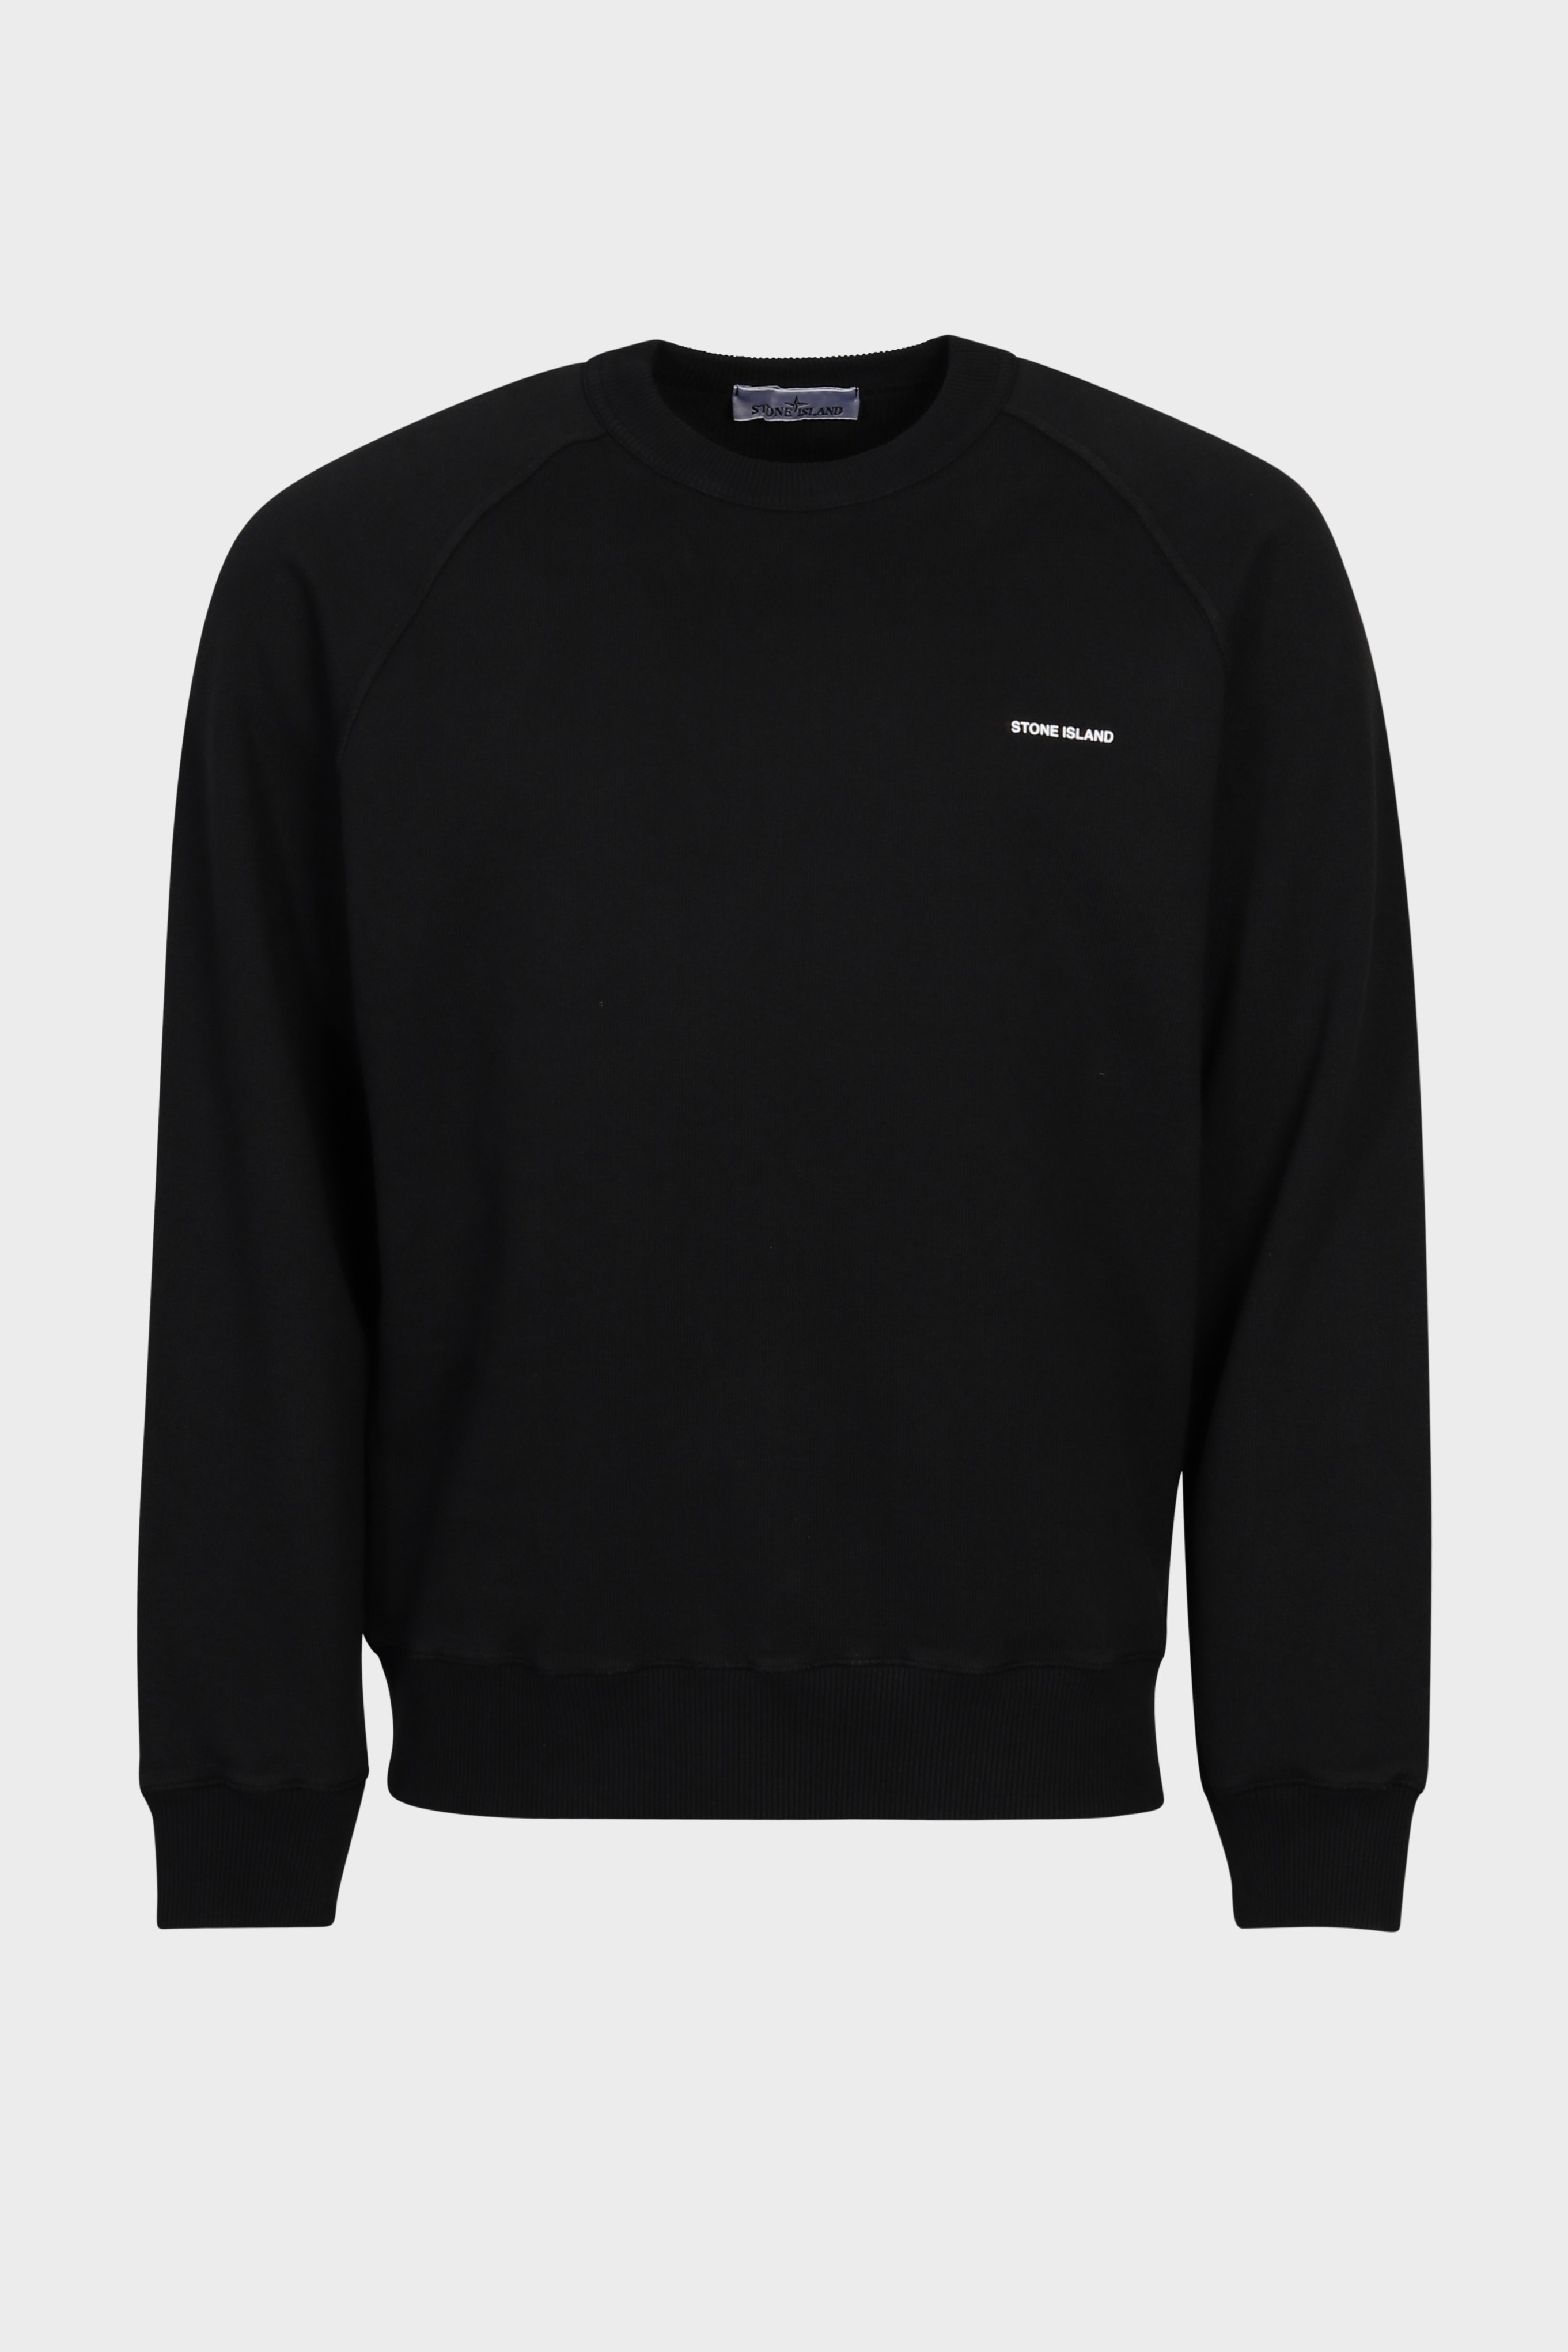 STONE ISLAND Stamp Sweatshirt in Black 3XL